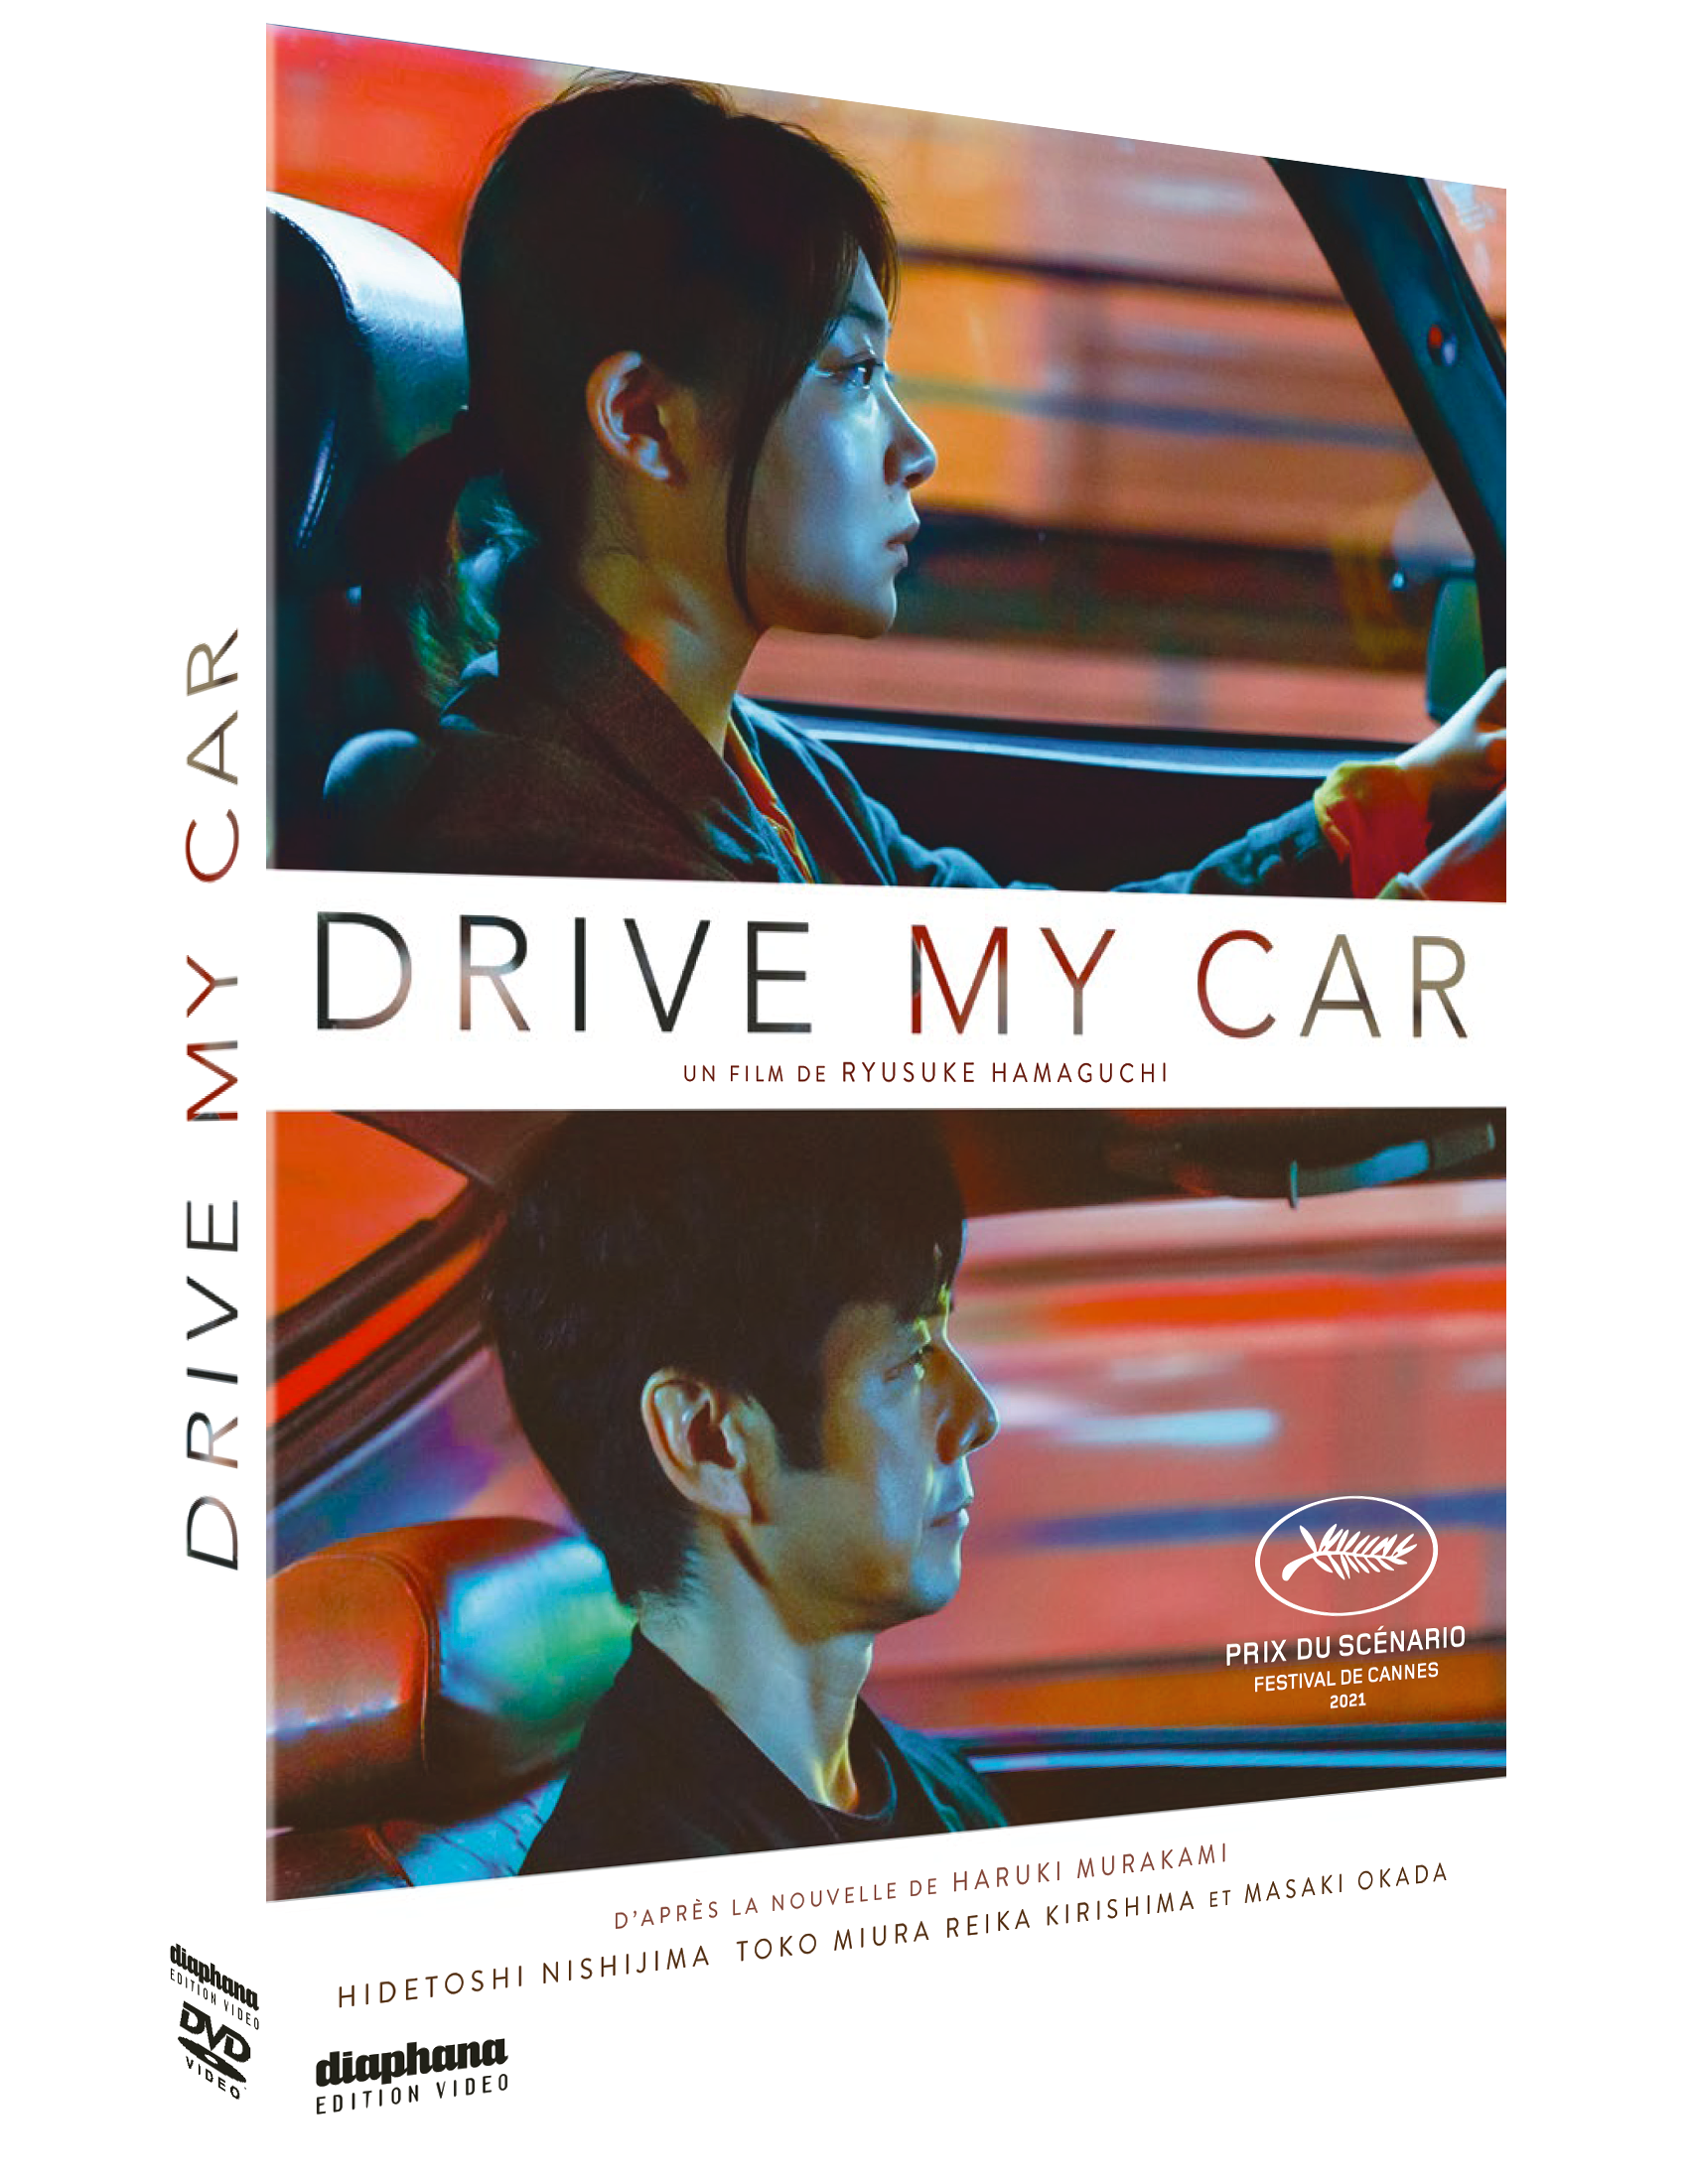 Drive my Car de Ryusuke Hamaguchi sort en DVD et Blu-ray.